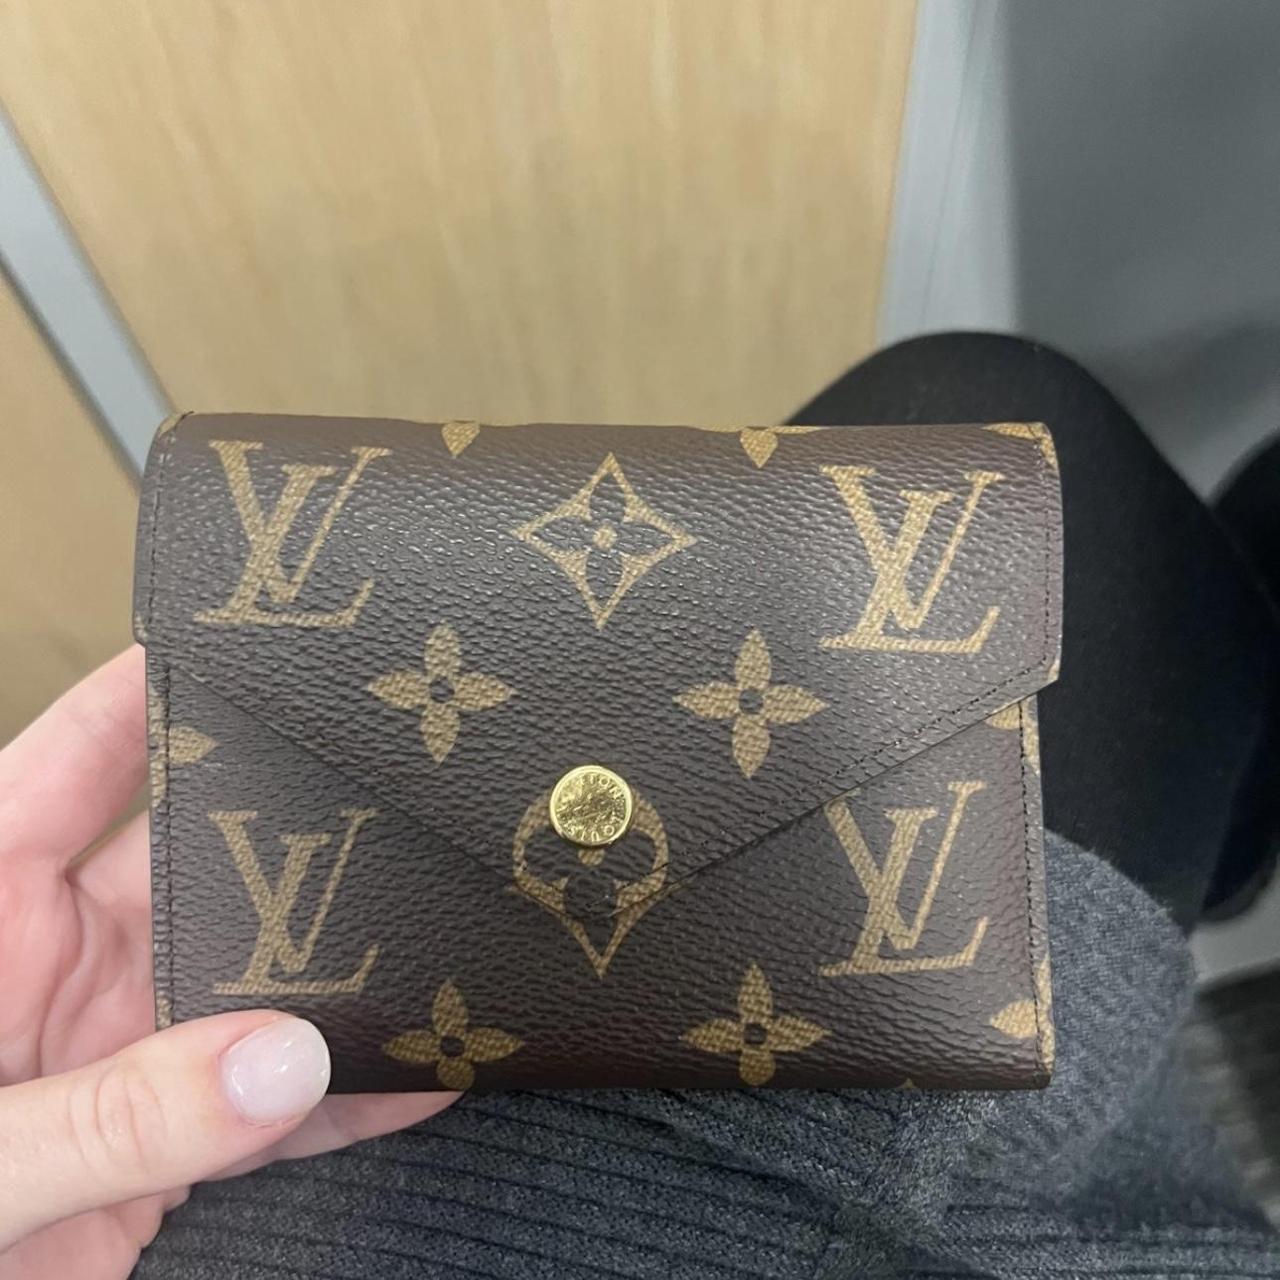 Louis Vuitton wallet brand new #wallet #Louisvuitton - Depop